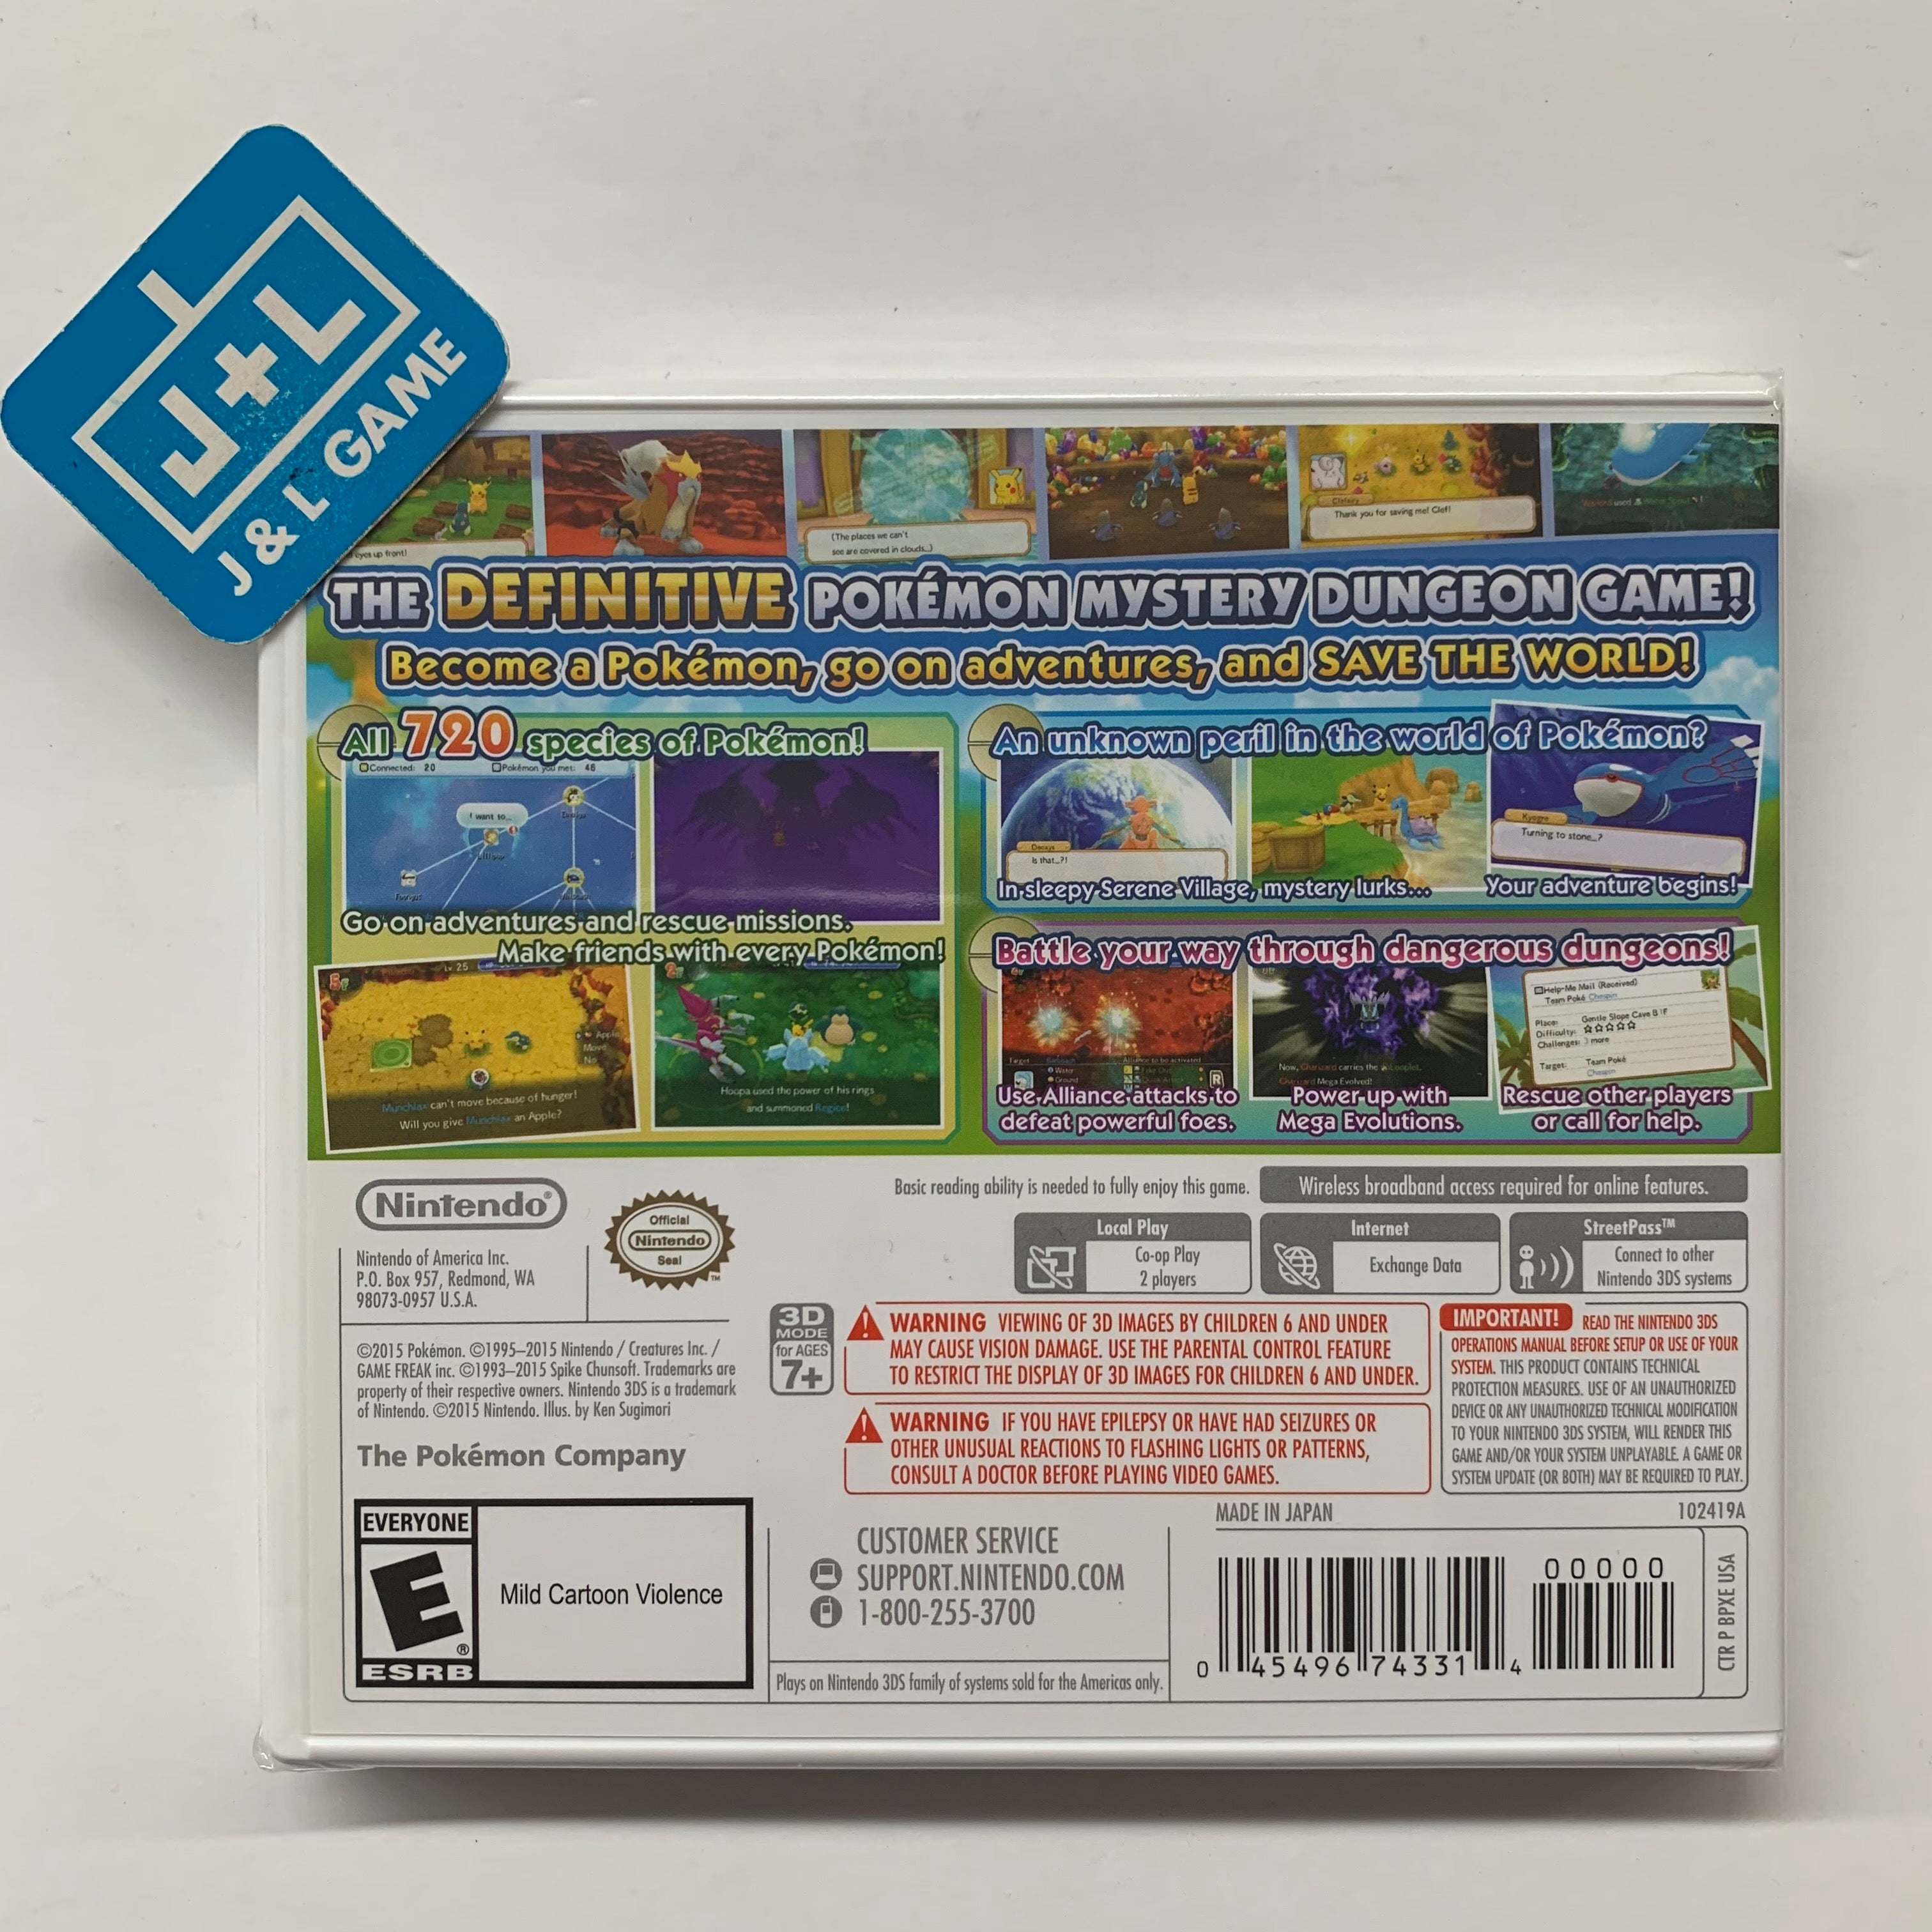 Pokemon Super Mystery Dungeon - Nintendo 3DS Video Games Nintendo   